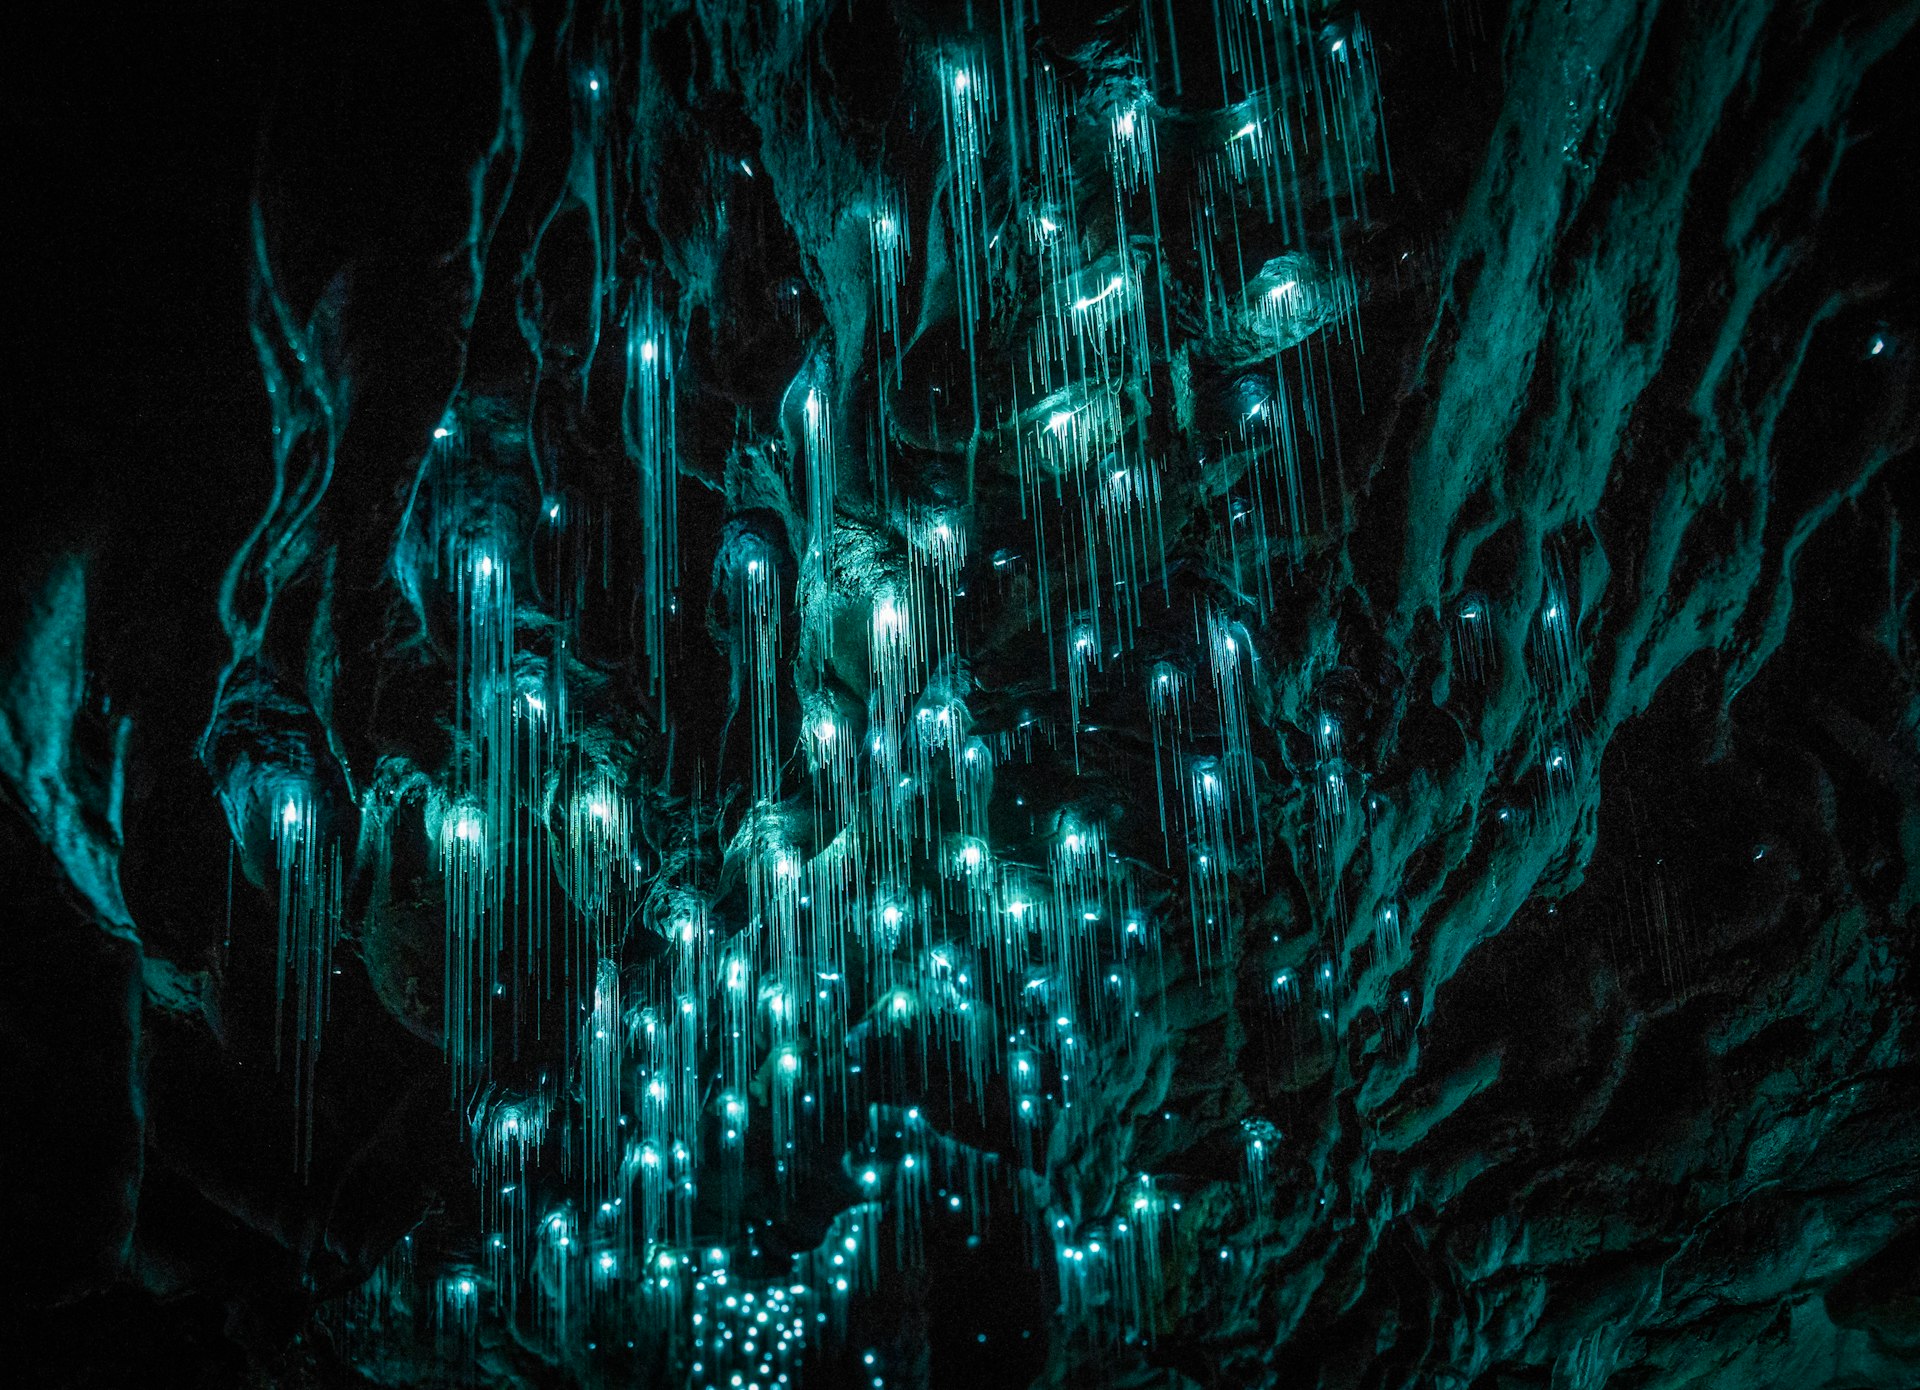 Greeny-blue, luminous glowworms hang from the dark roofs of caves lighting up the Waitomo Glowworm Caves in Waikato, New Zealand